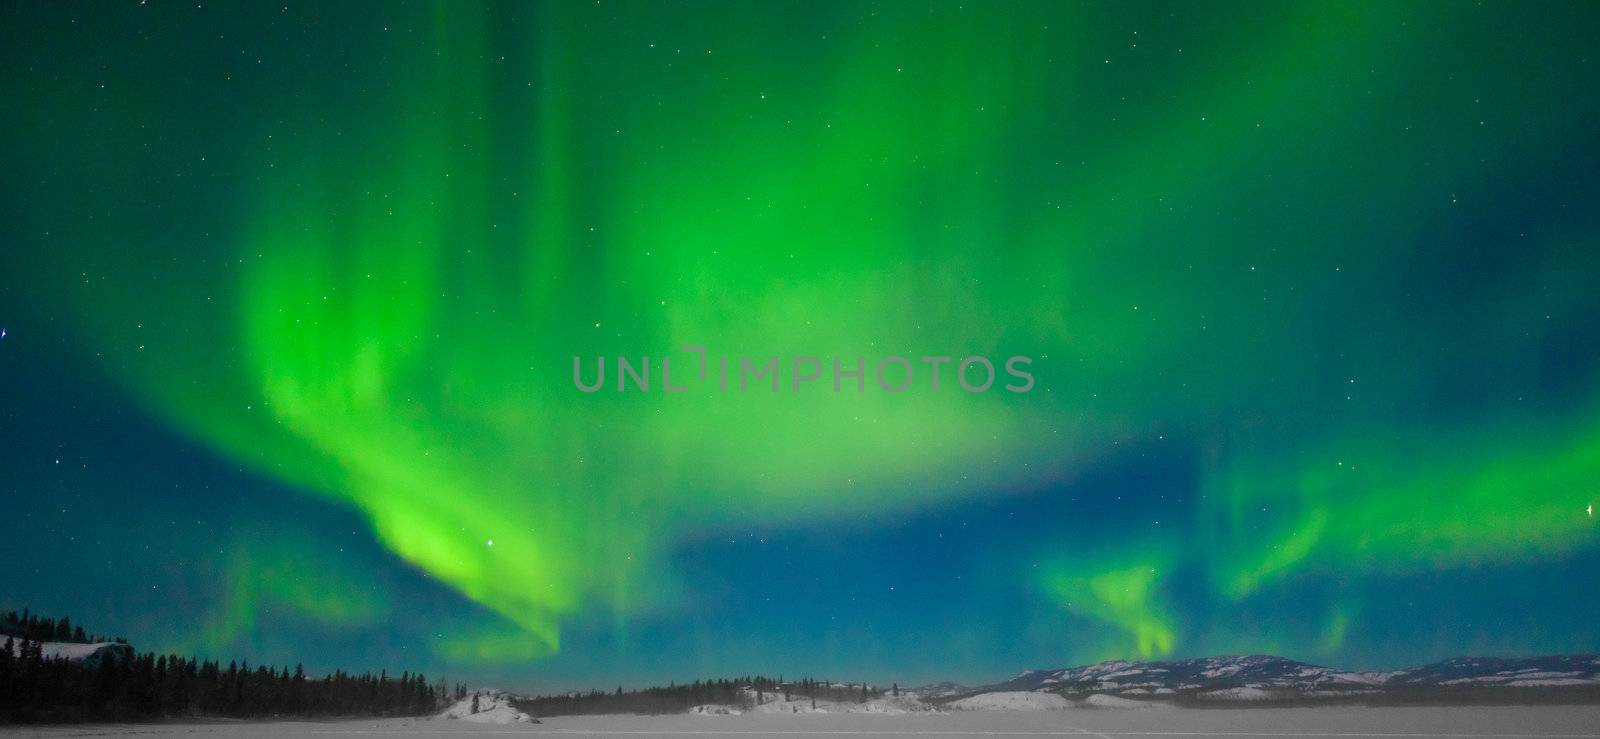 Northern Lights (Aurora borealis) by PiLens